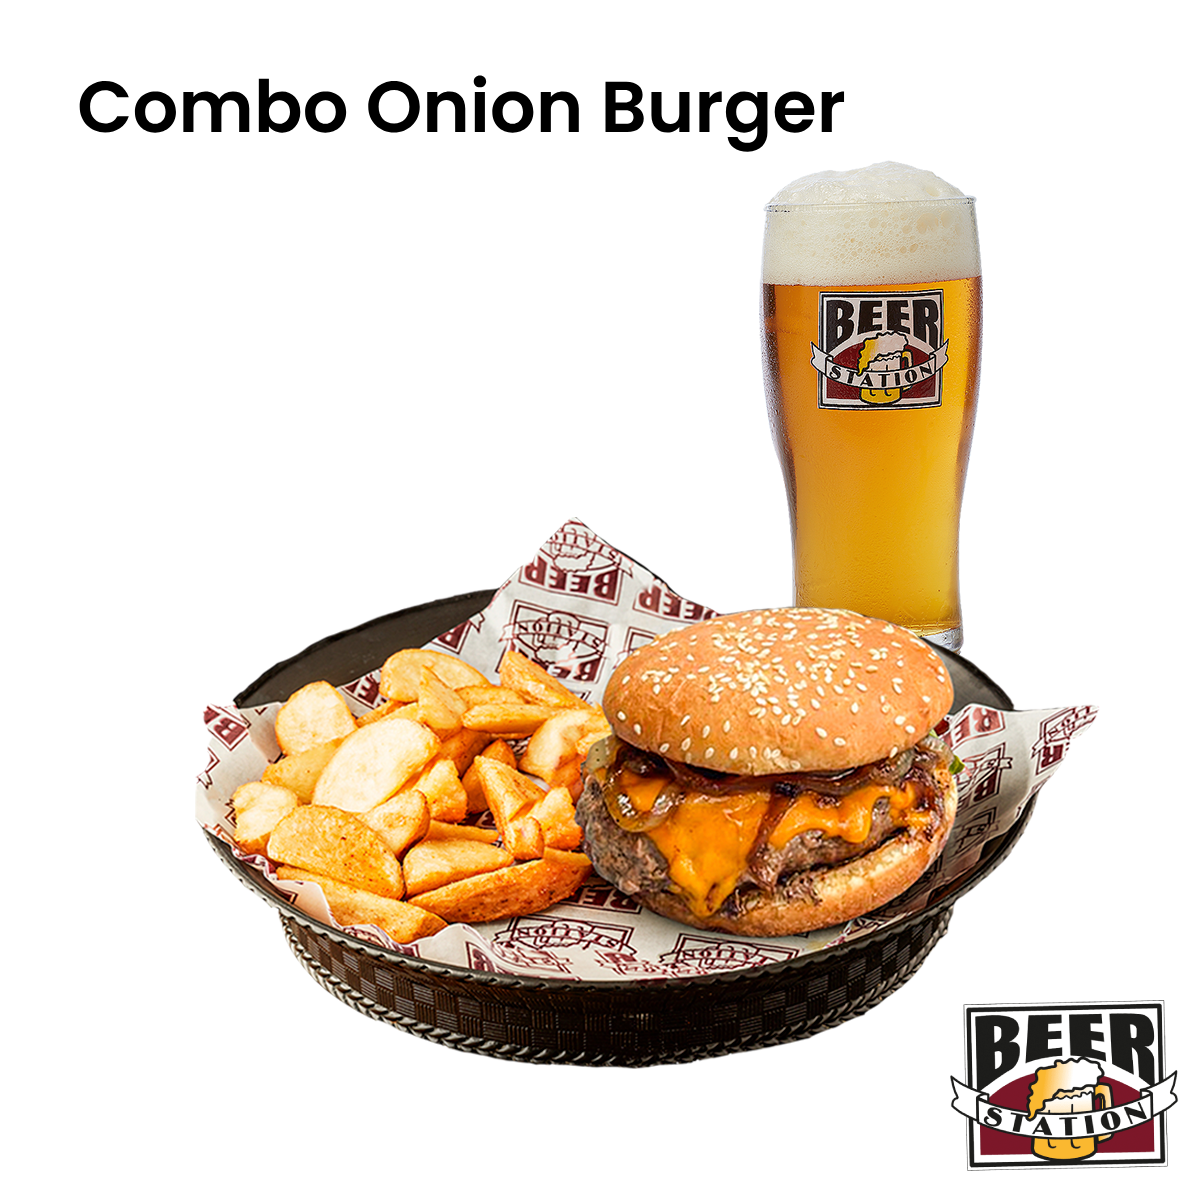 Bono Combo Onion Burger - Beer Station